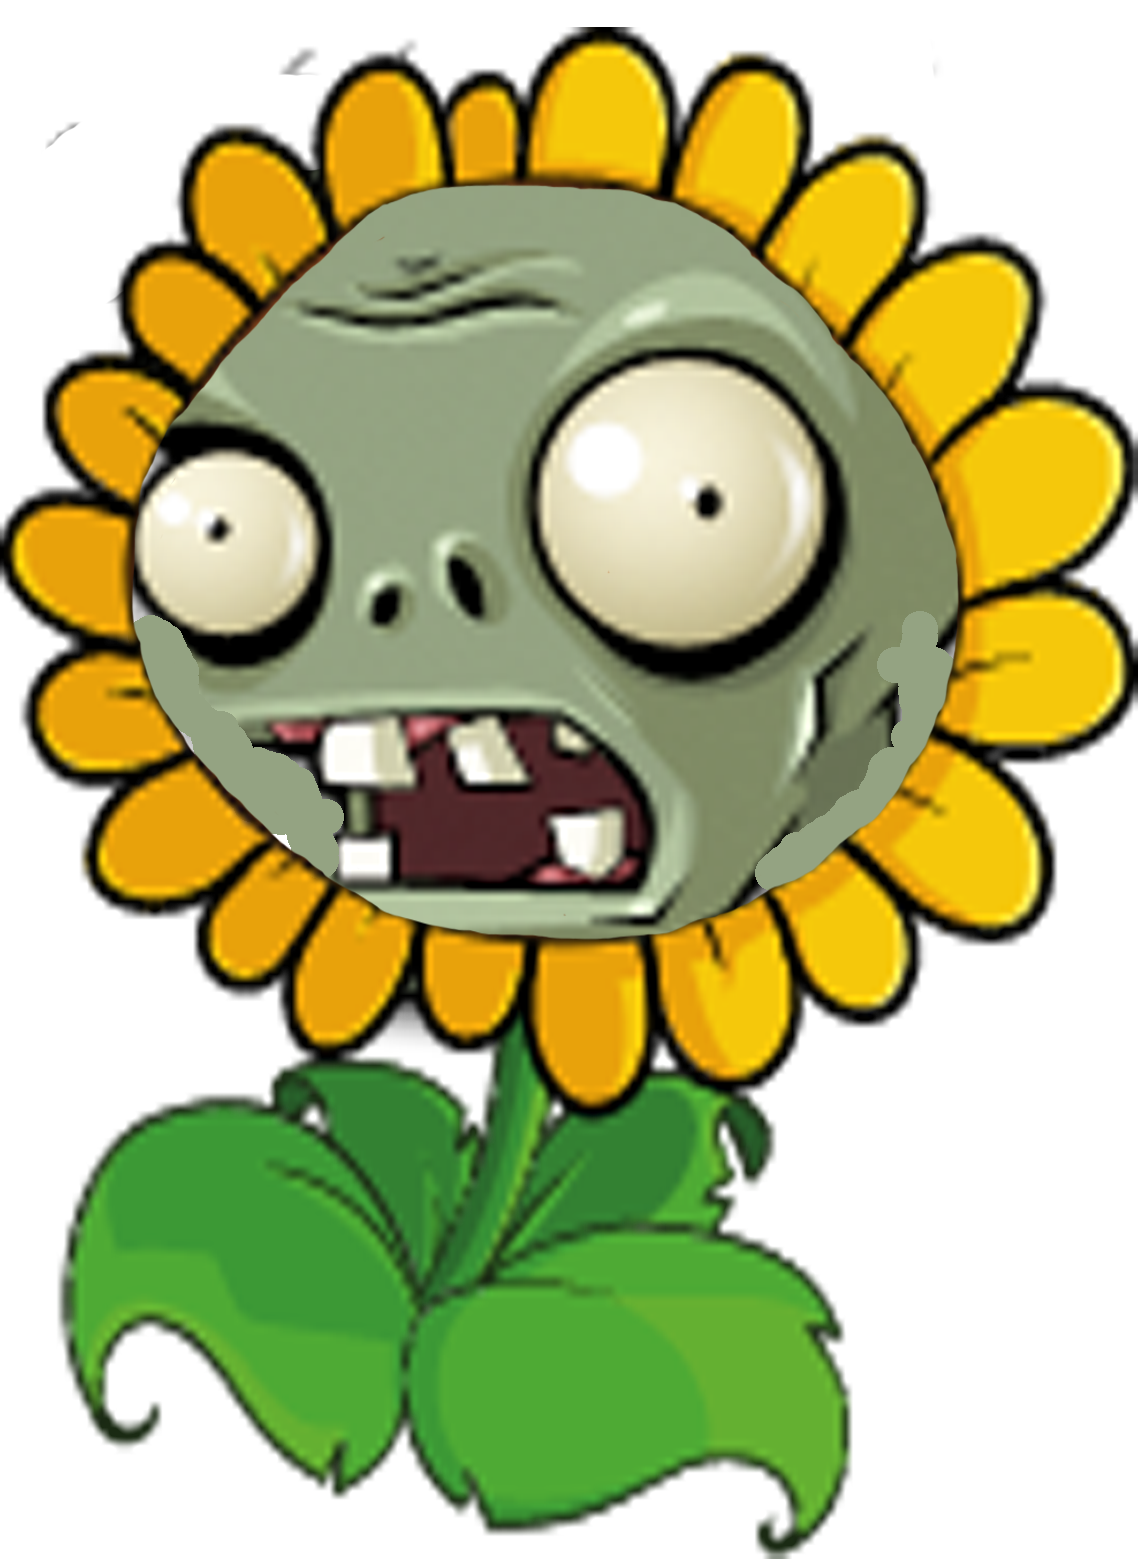 plants vs zombies zombie characters